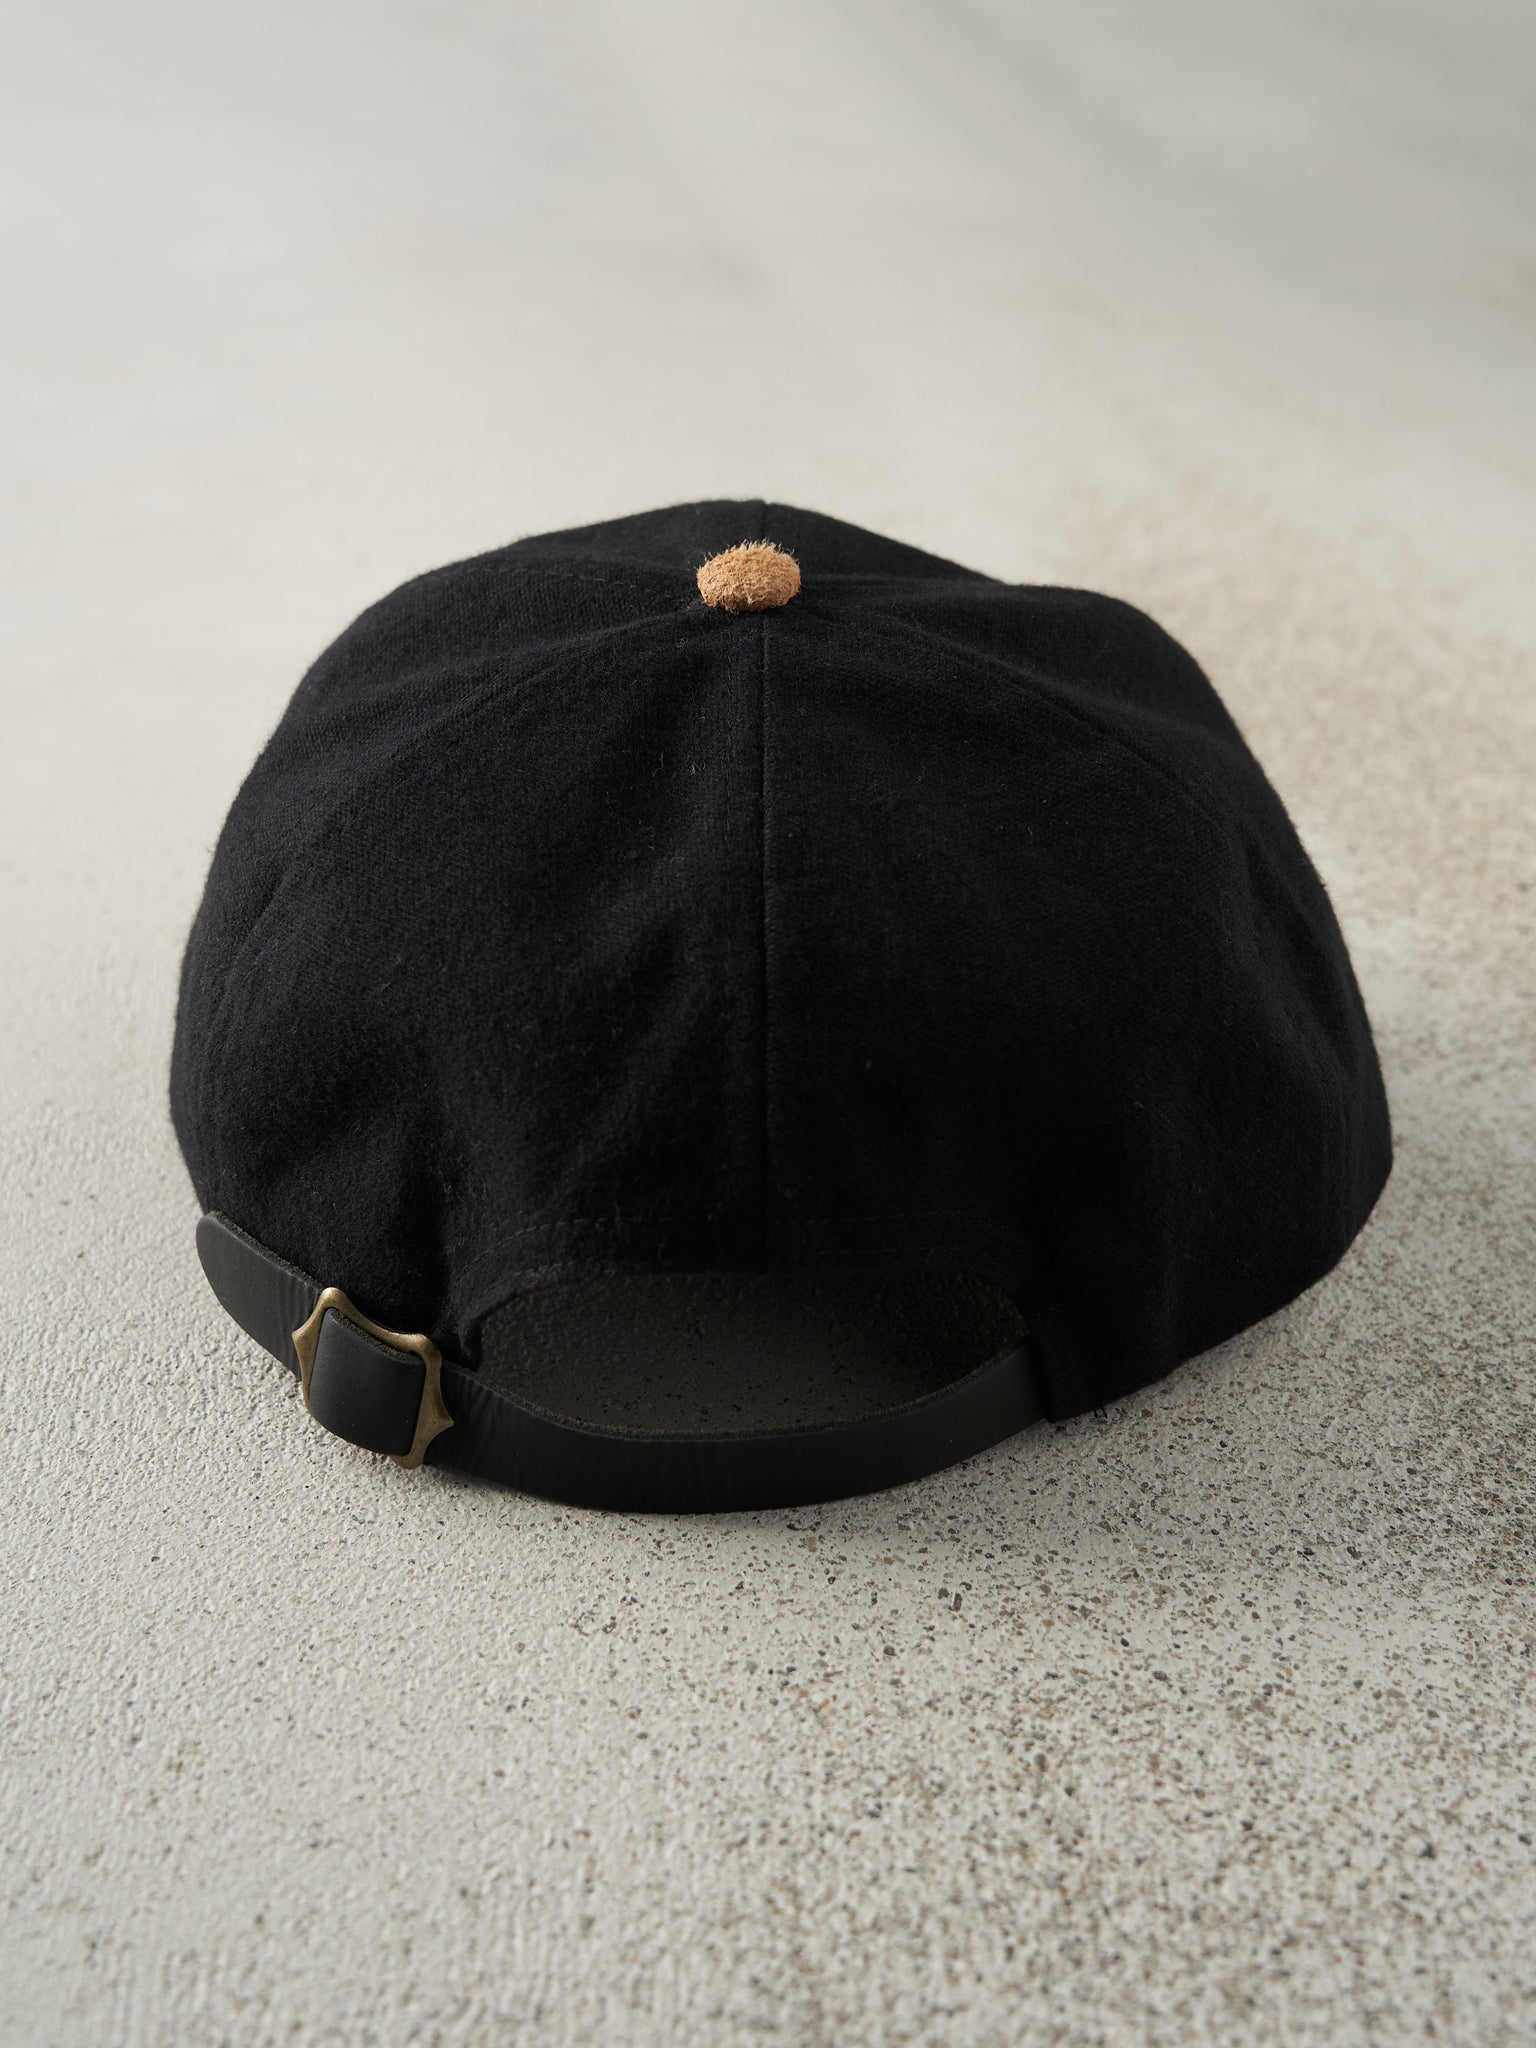 Vintage 90s Black & Beige Embroidered The Vancouver Sun Leather Strap Back Hat